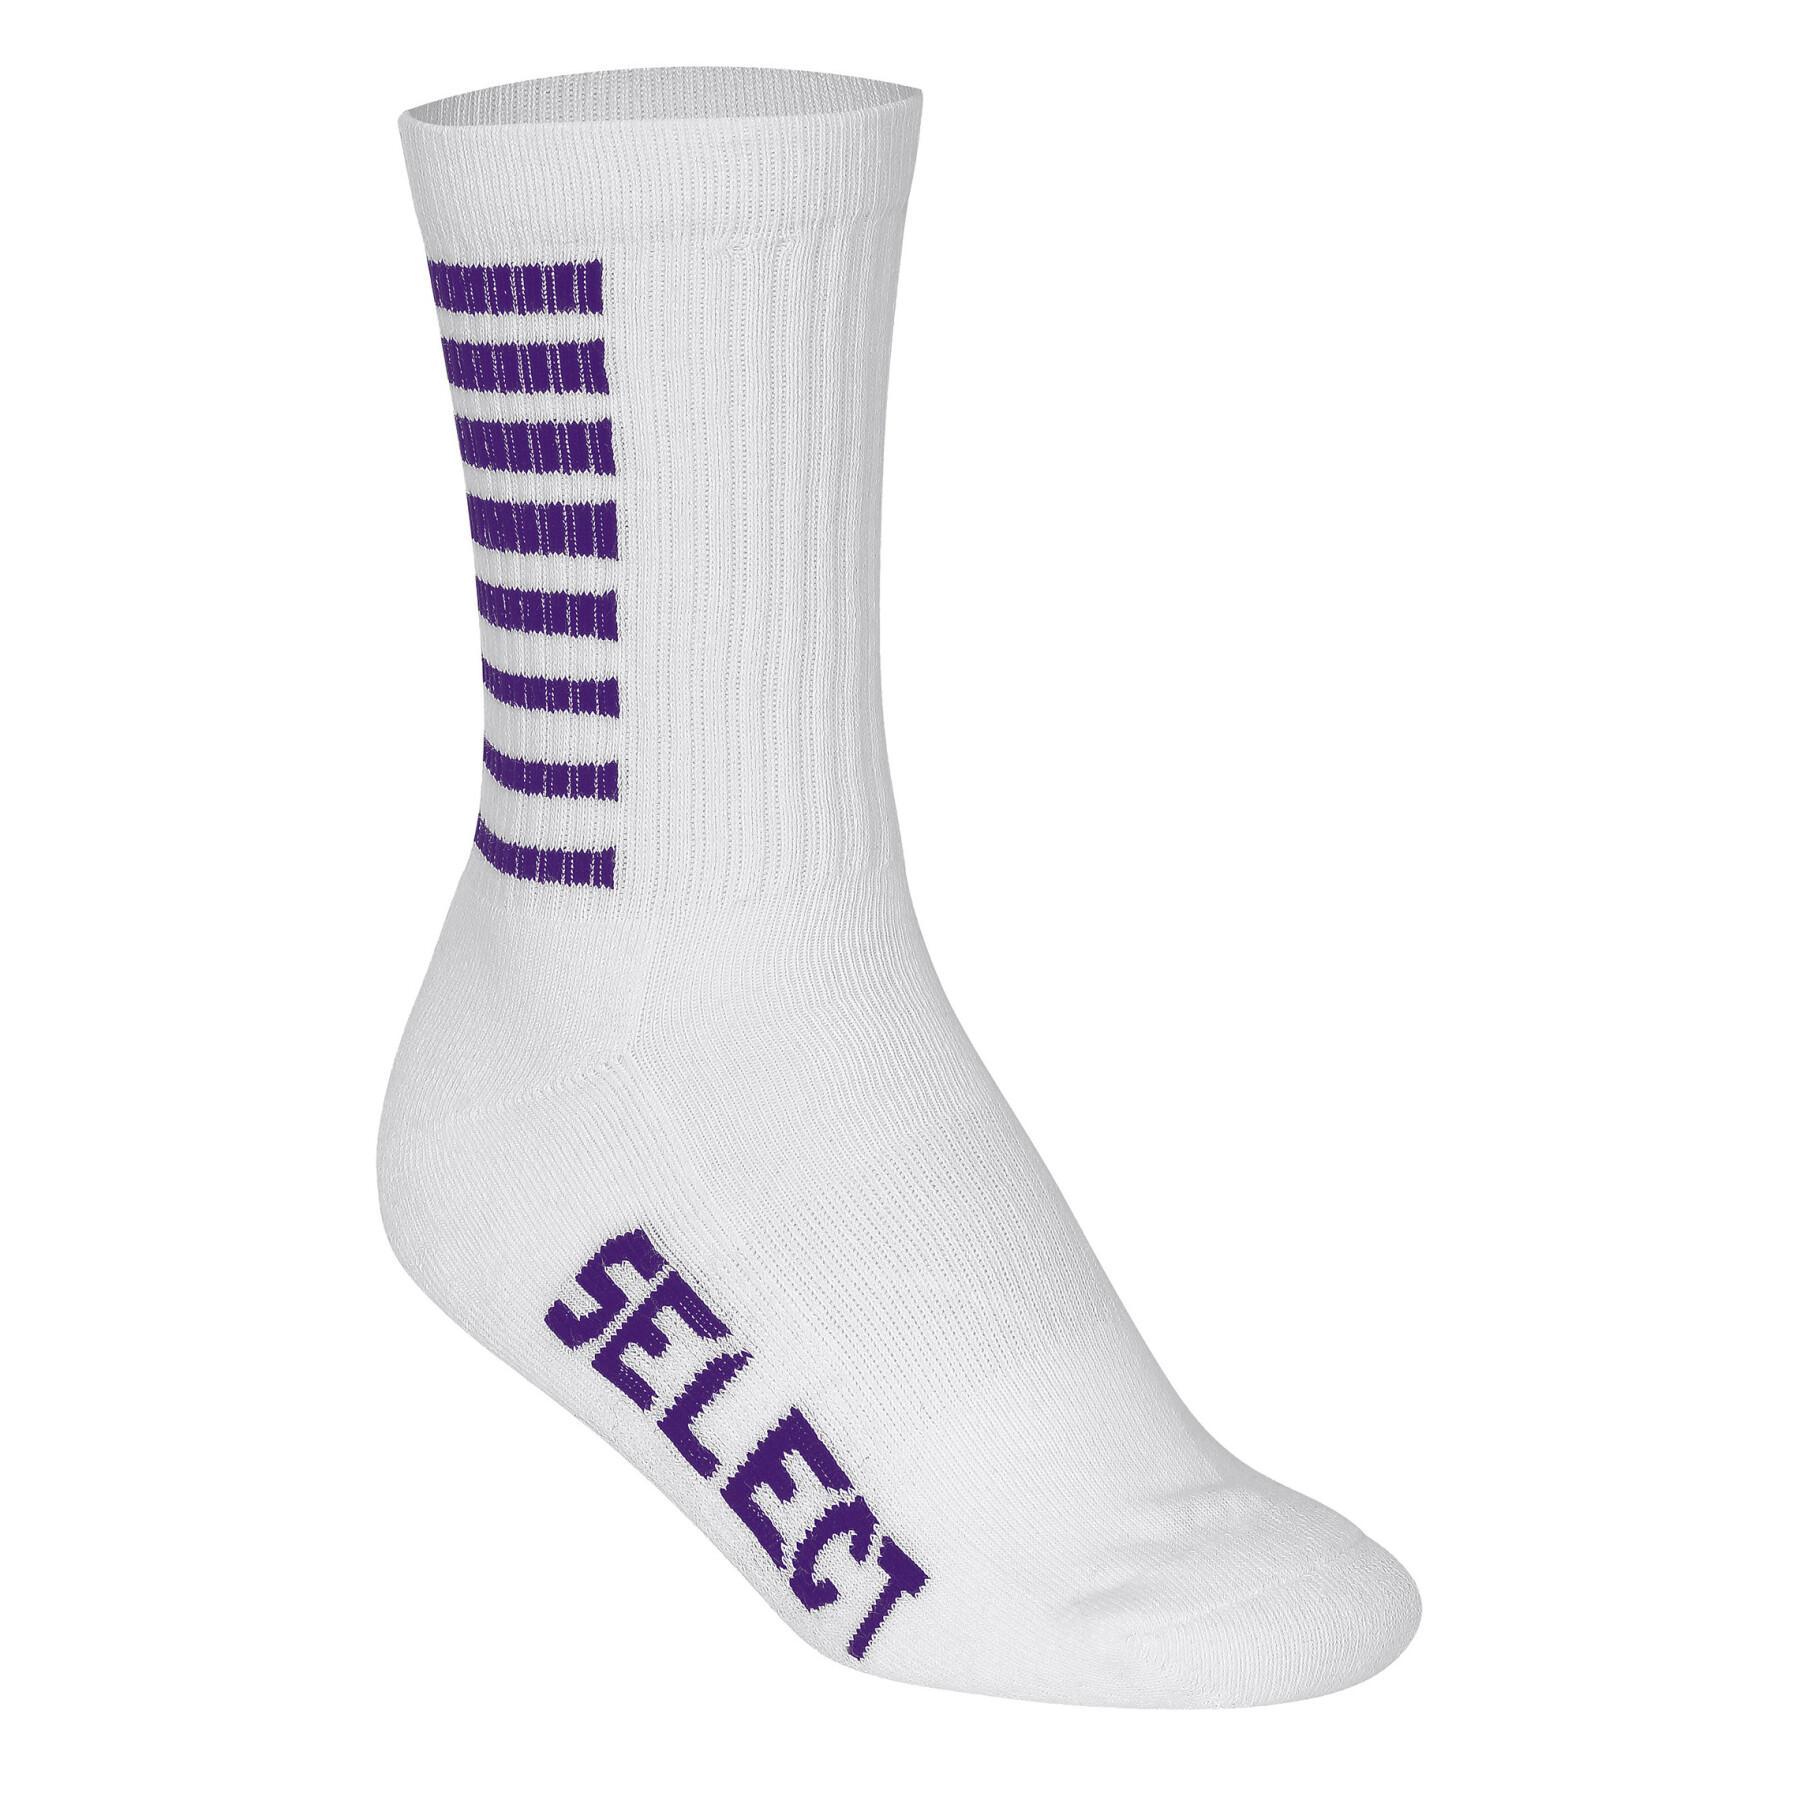 Socks Select Basic